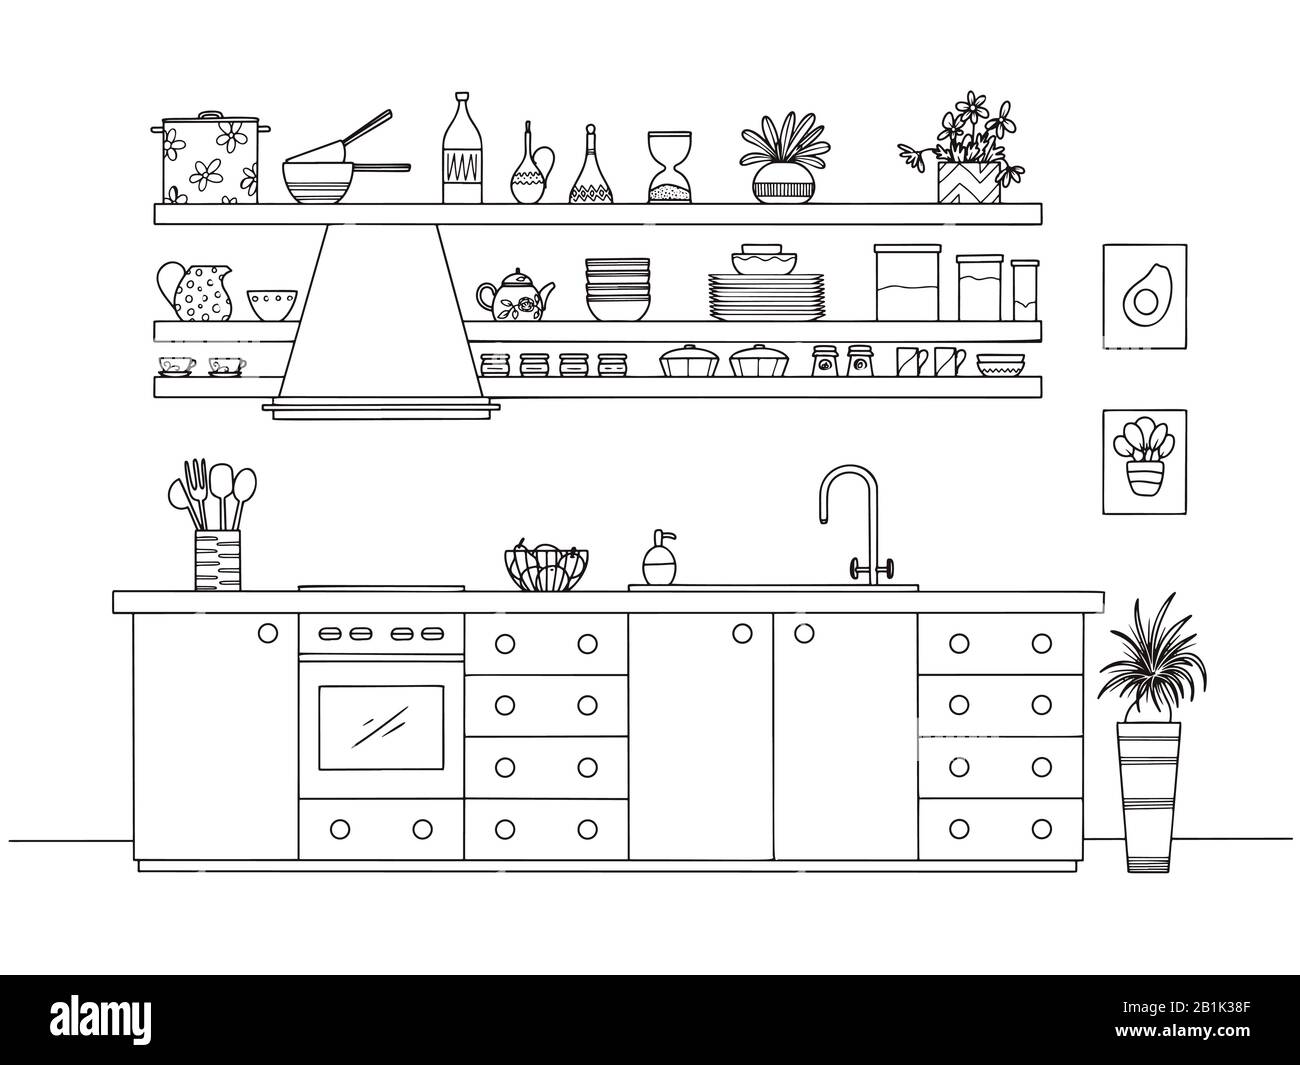 https://c8.alamy.com/comp/2B1K38F/hand-drawn-kitchen-kitchen-furniture-vector-illustration-in-sketch-style-2B1K38F.jpg